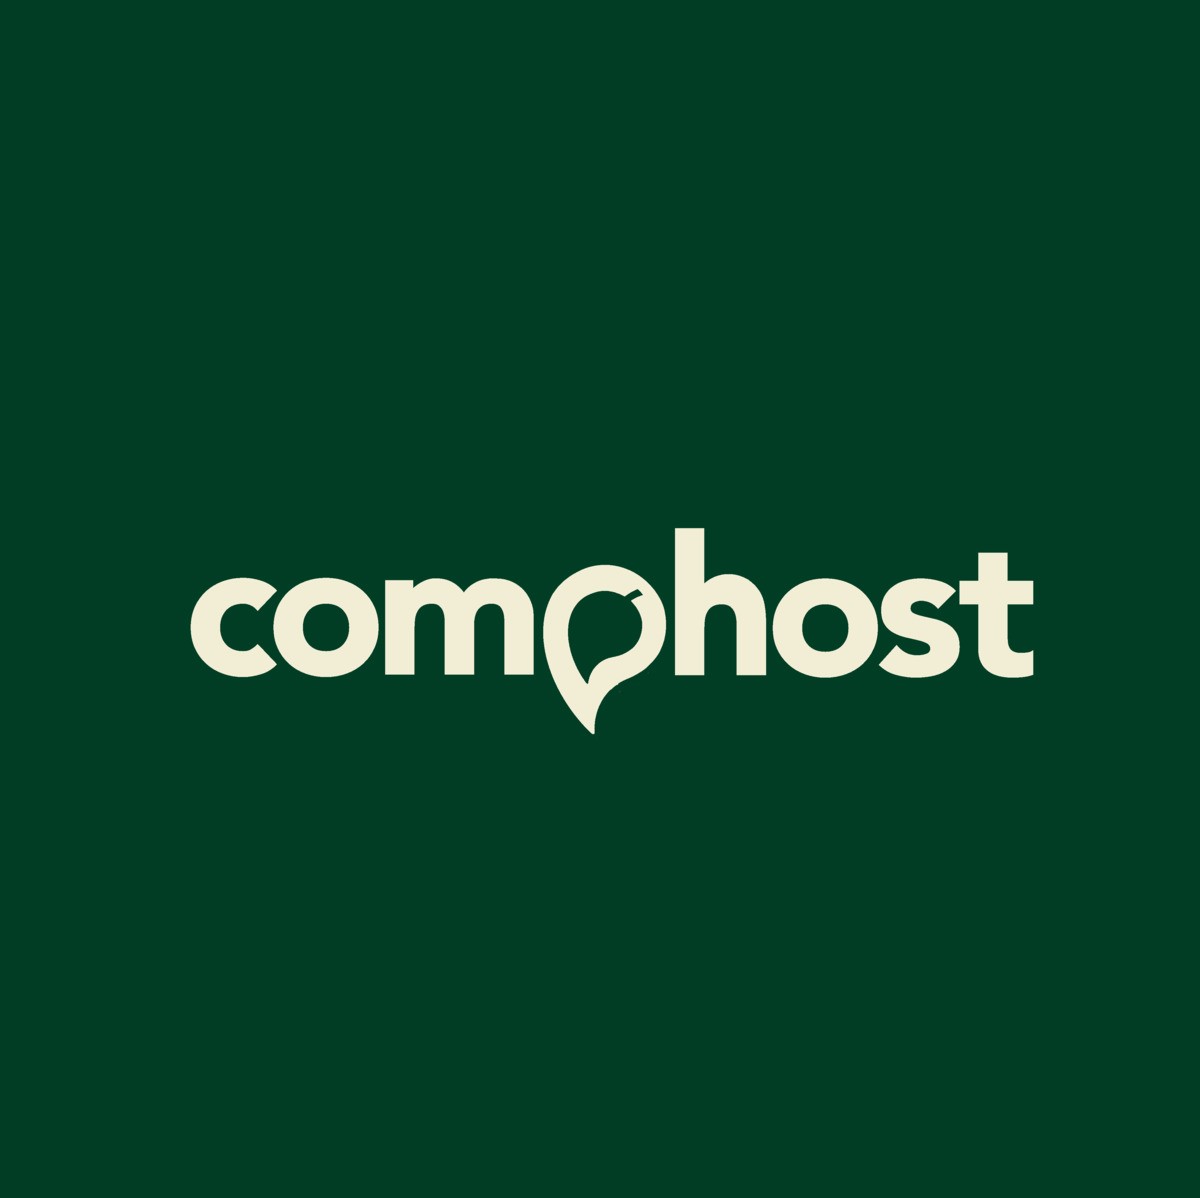 CompHost